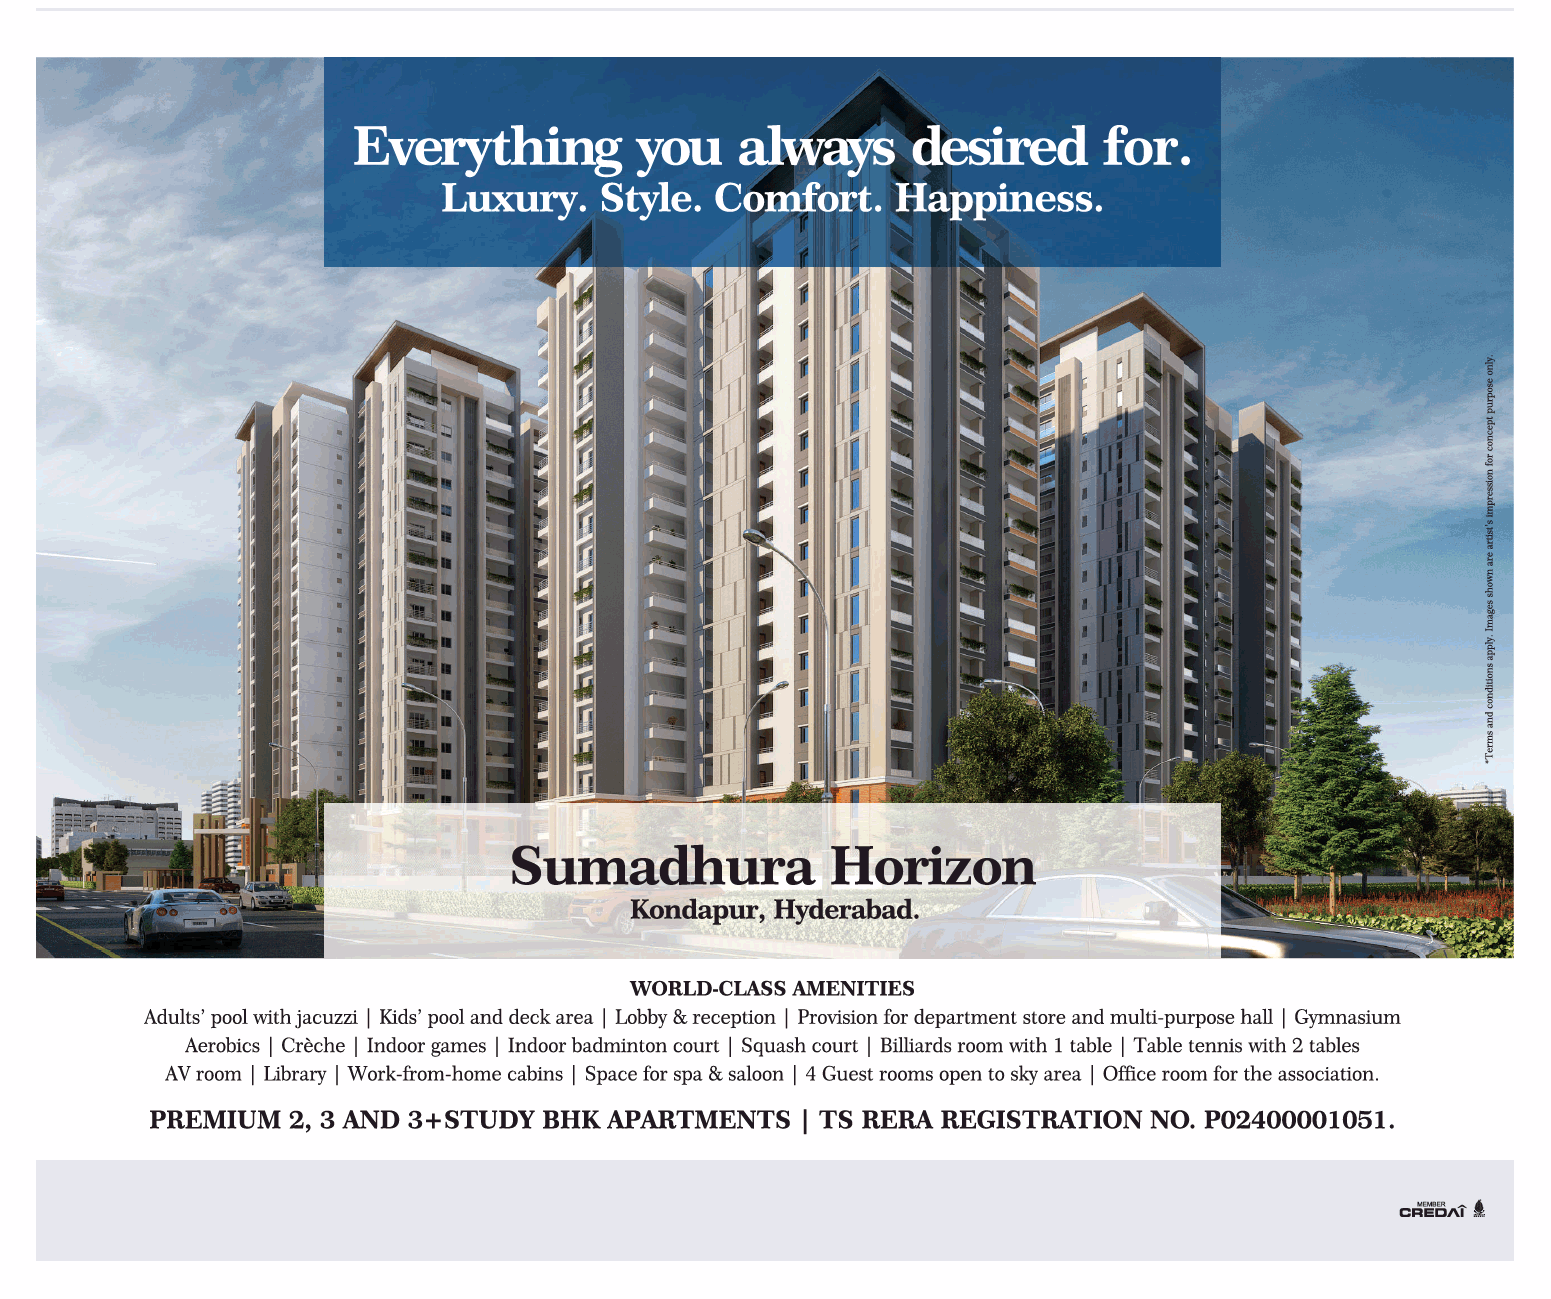 Premium 2, 3 and 3+study BHK apartments at Sumadhura Horizon in Kondapur, Hyderabad Update